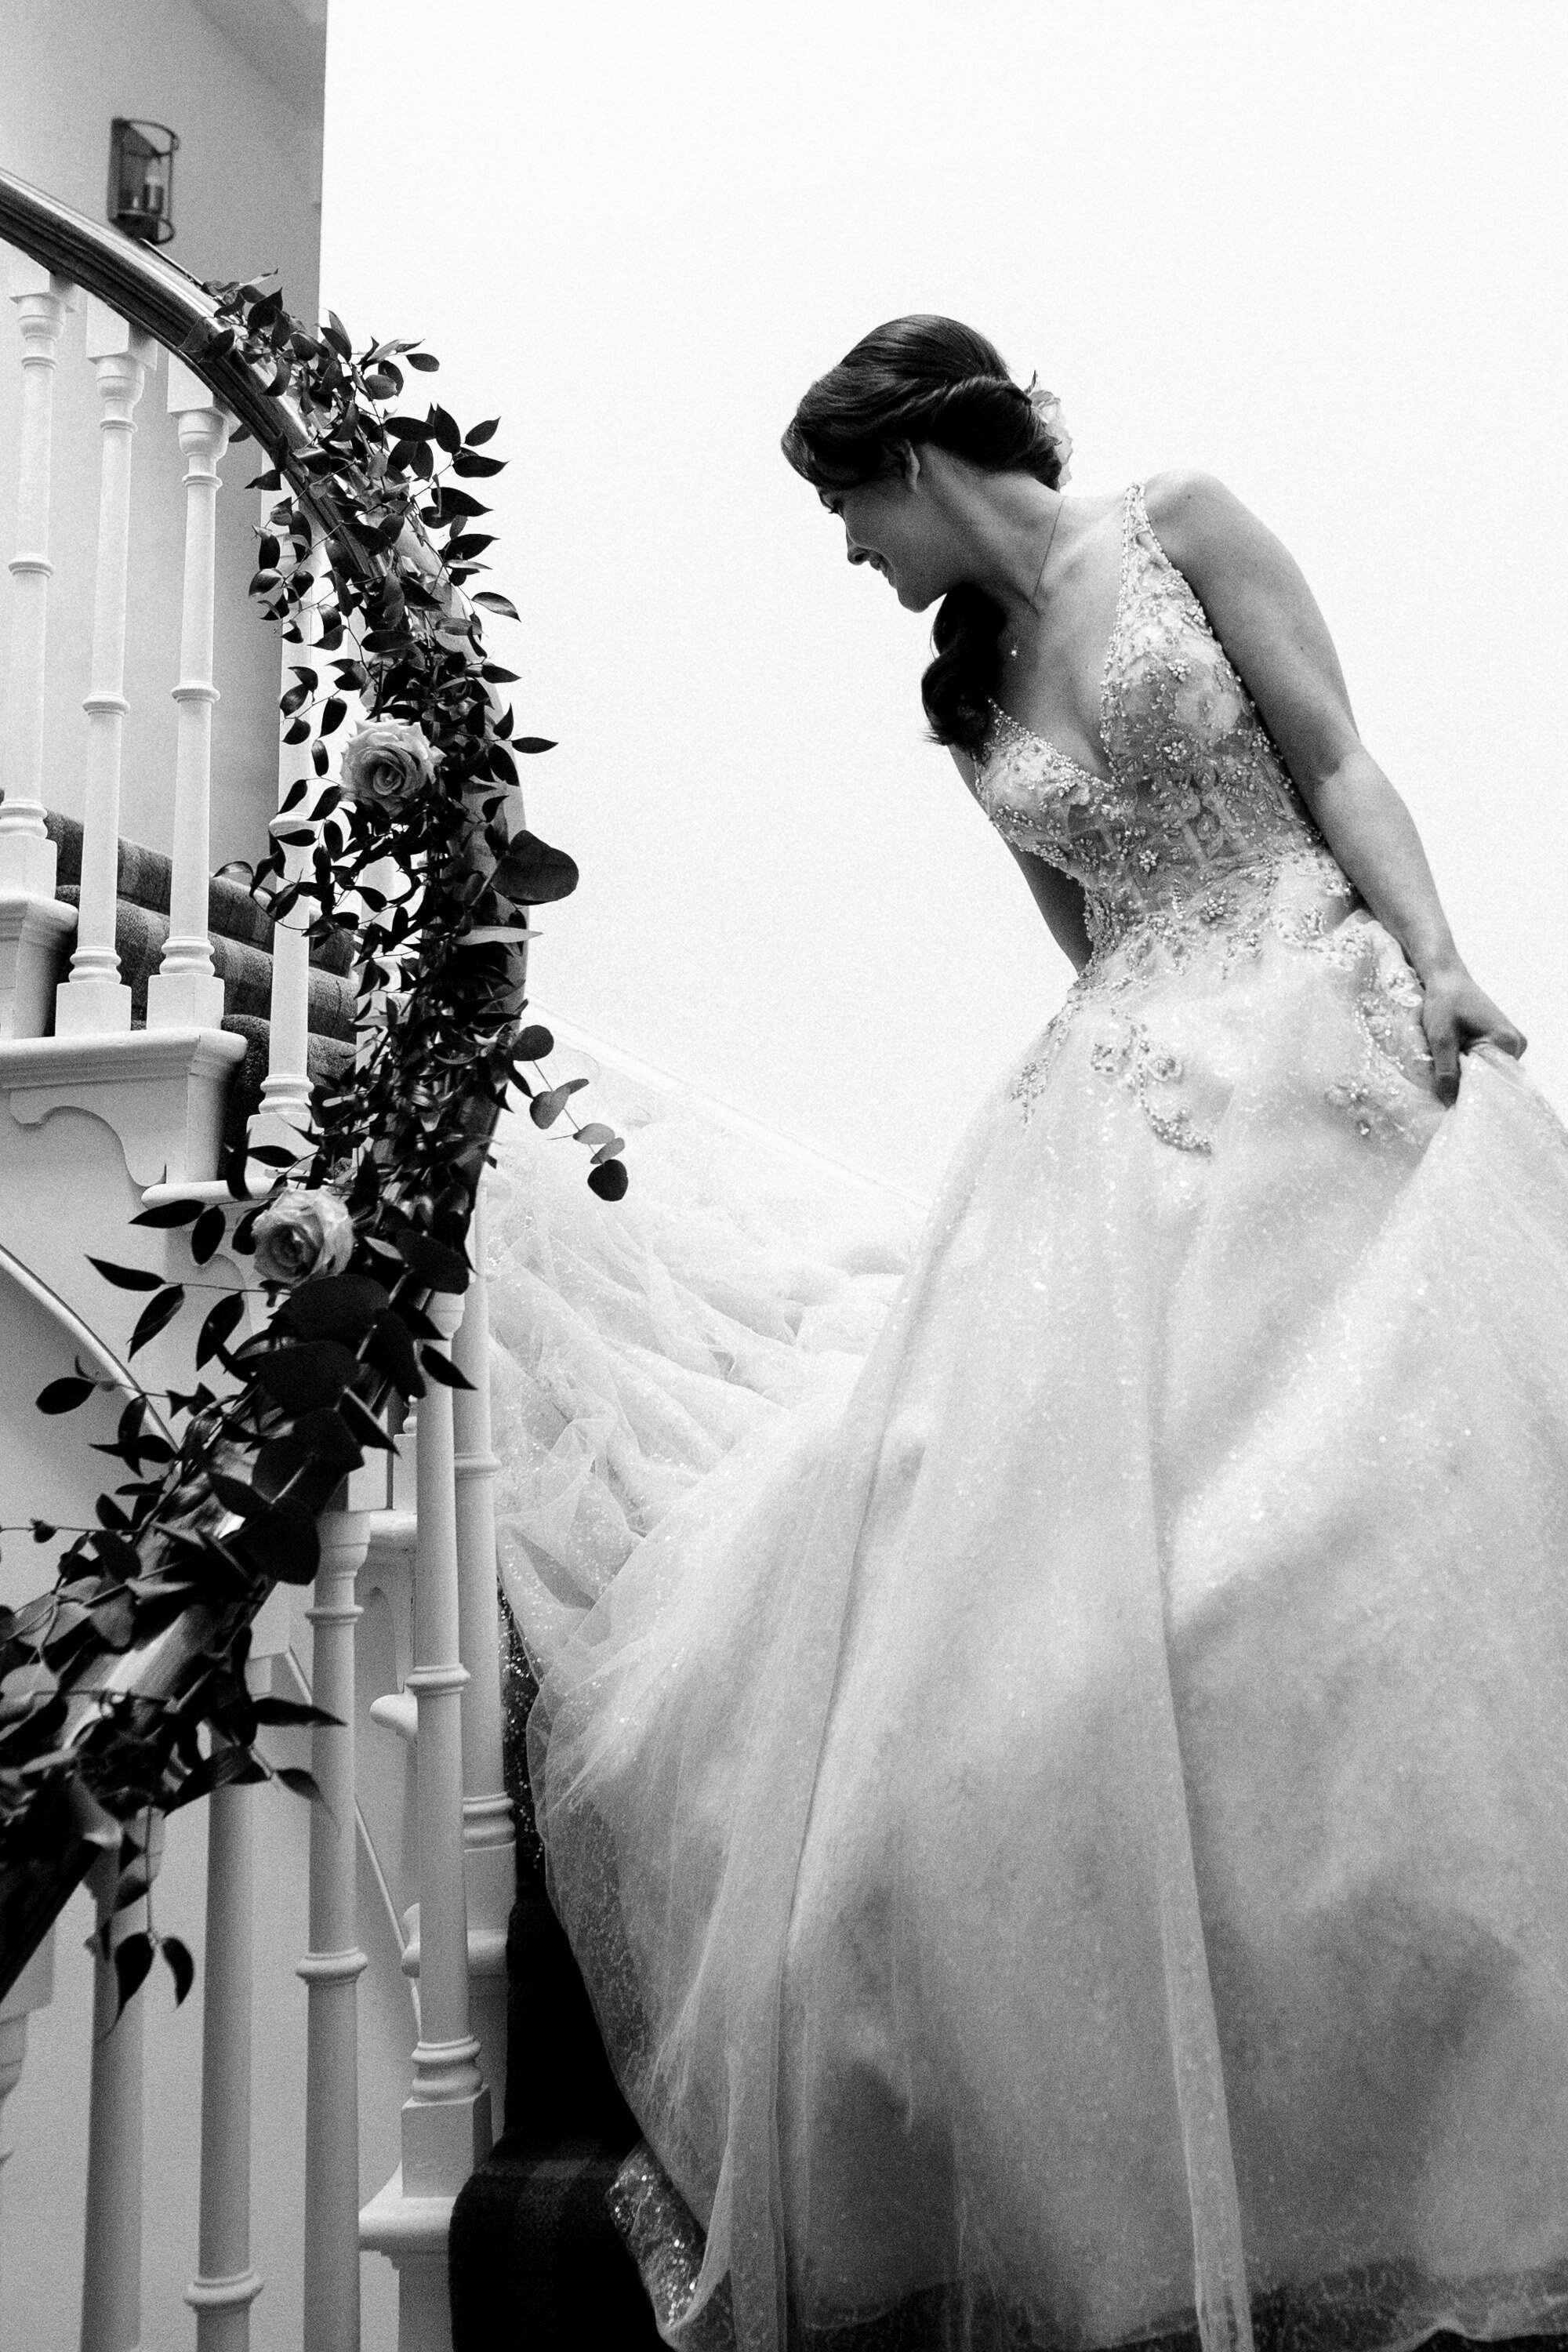 Kingsdown Rectory wedding photographer (c) Michael Newington Gray-19.jpg